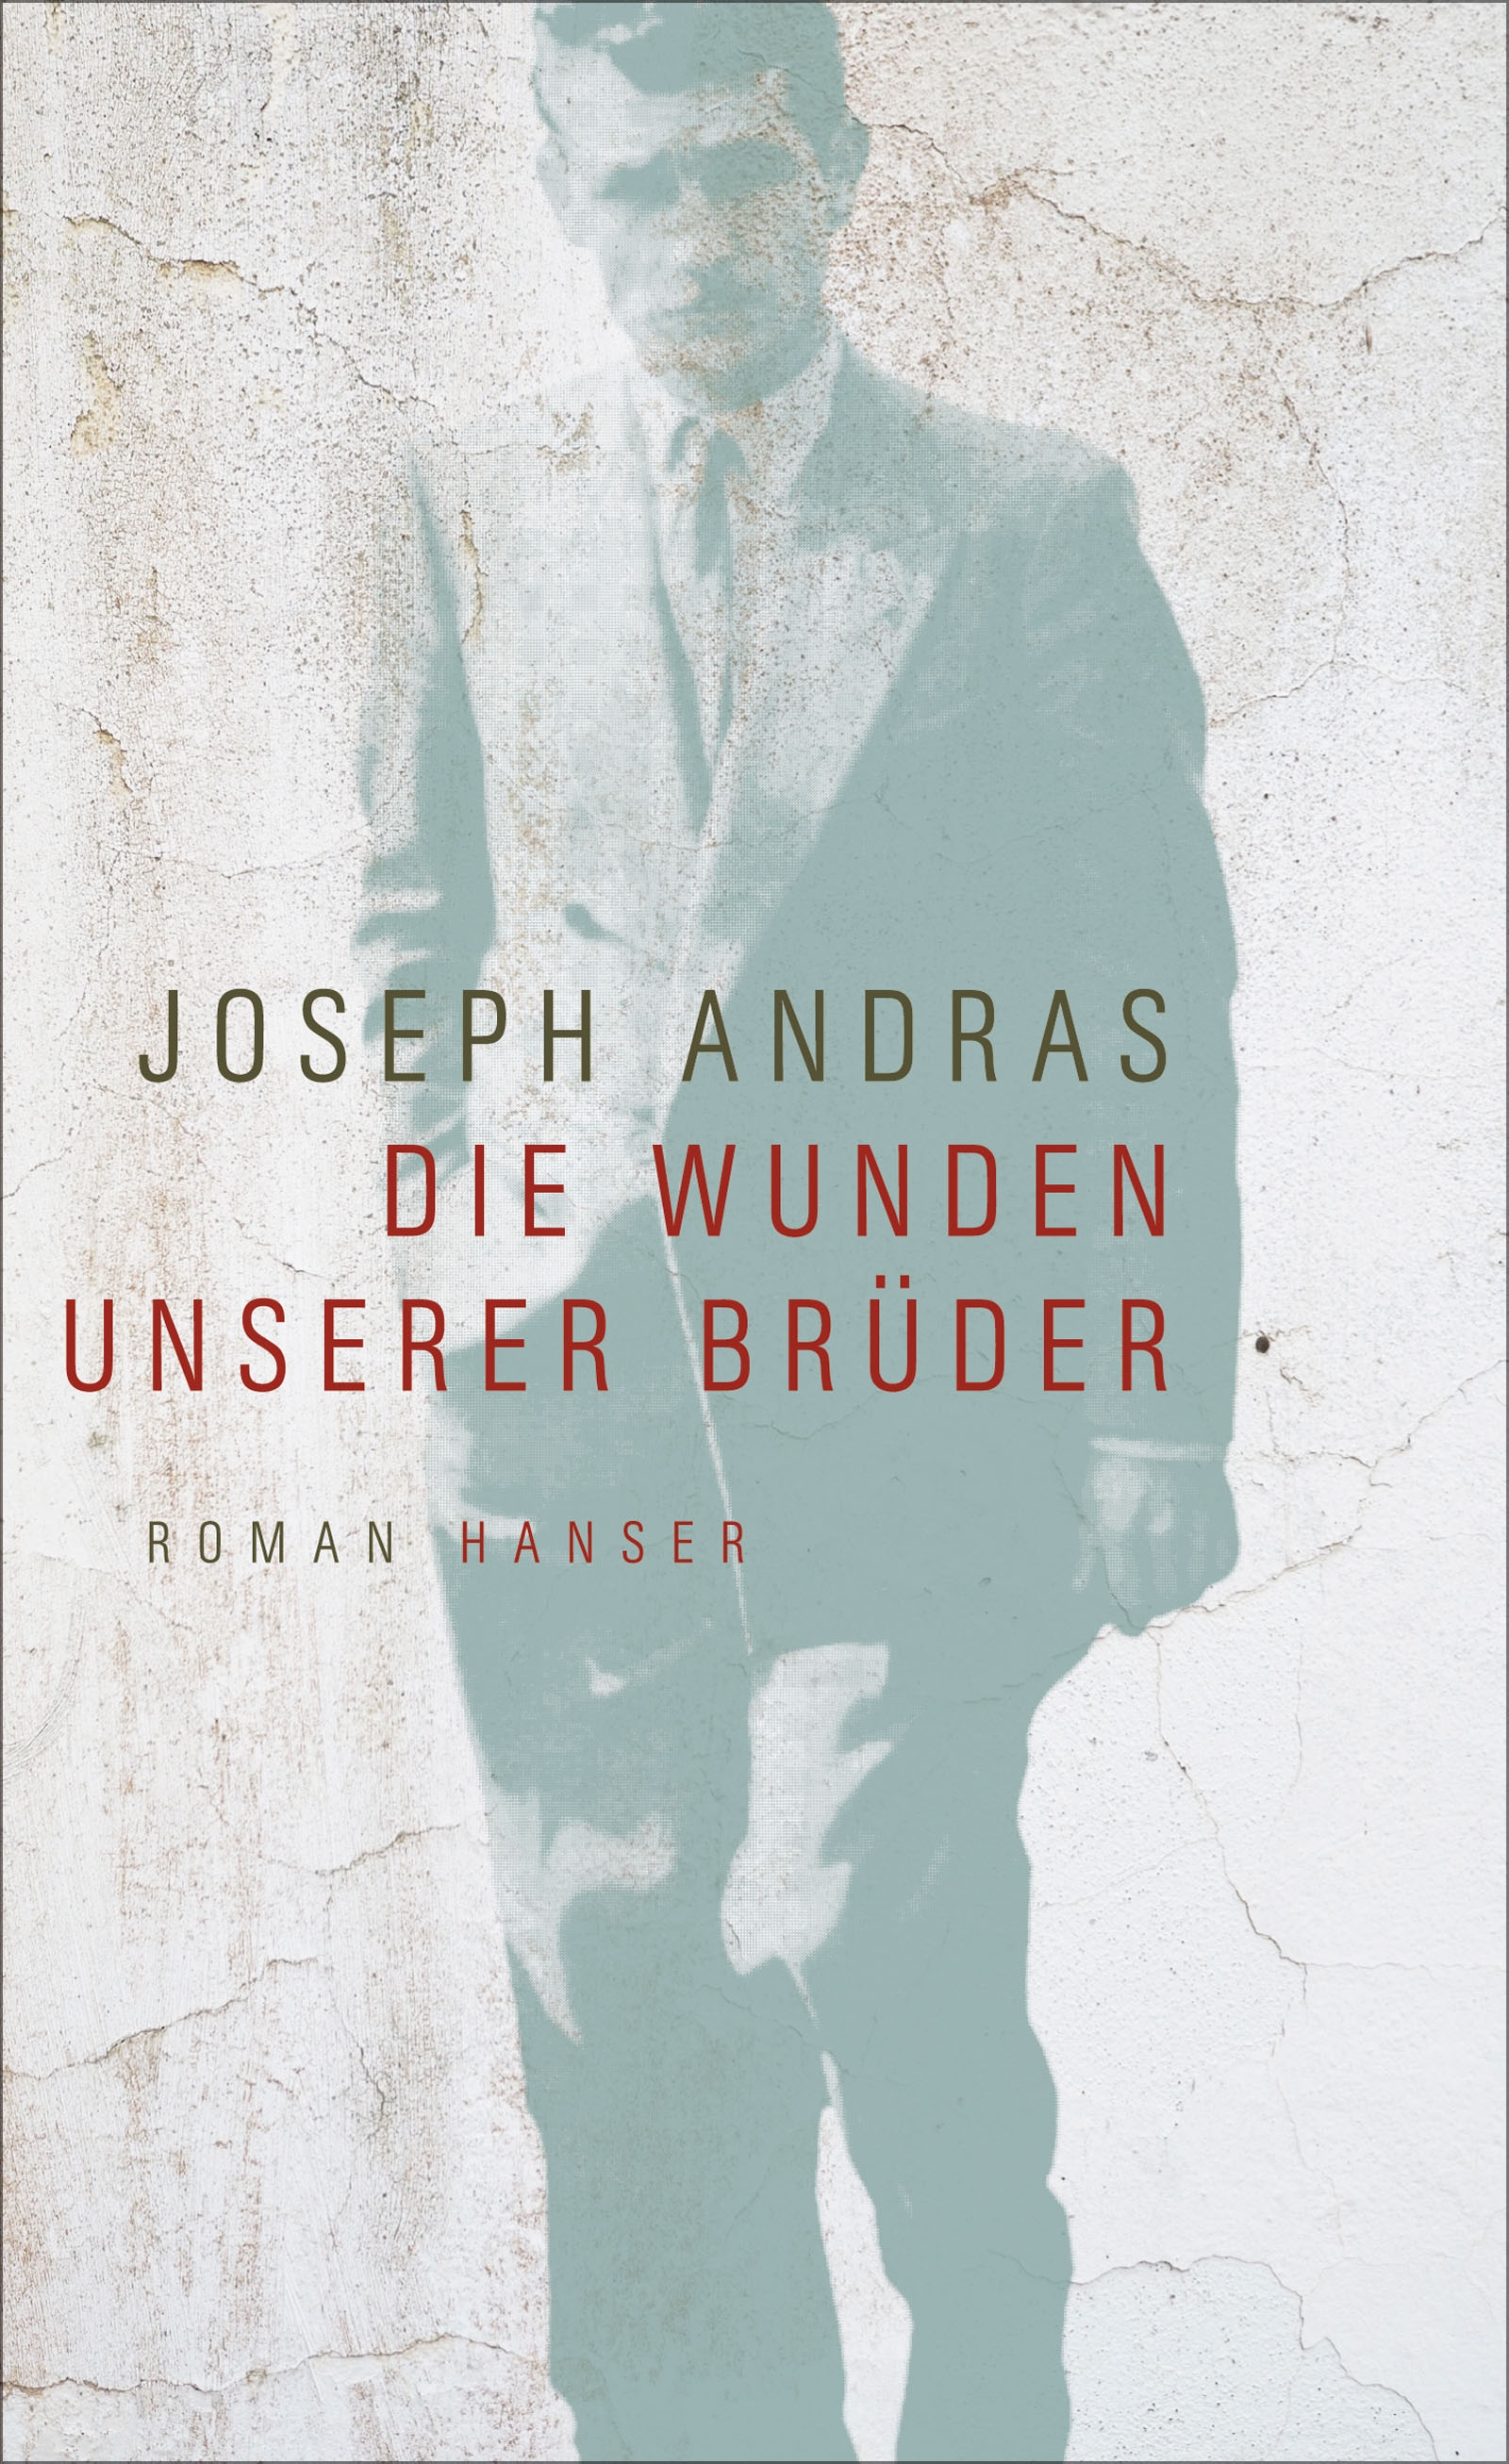 Buchcover Joseph Andras: "Die Wunden unserer Brüder" im Hanser-Verlag